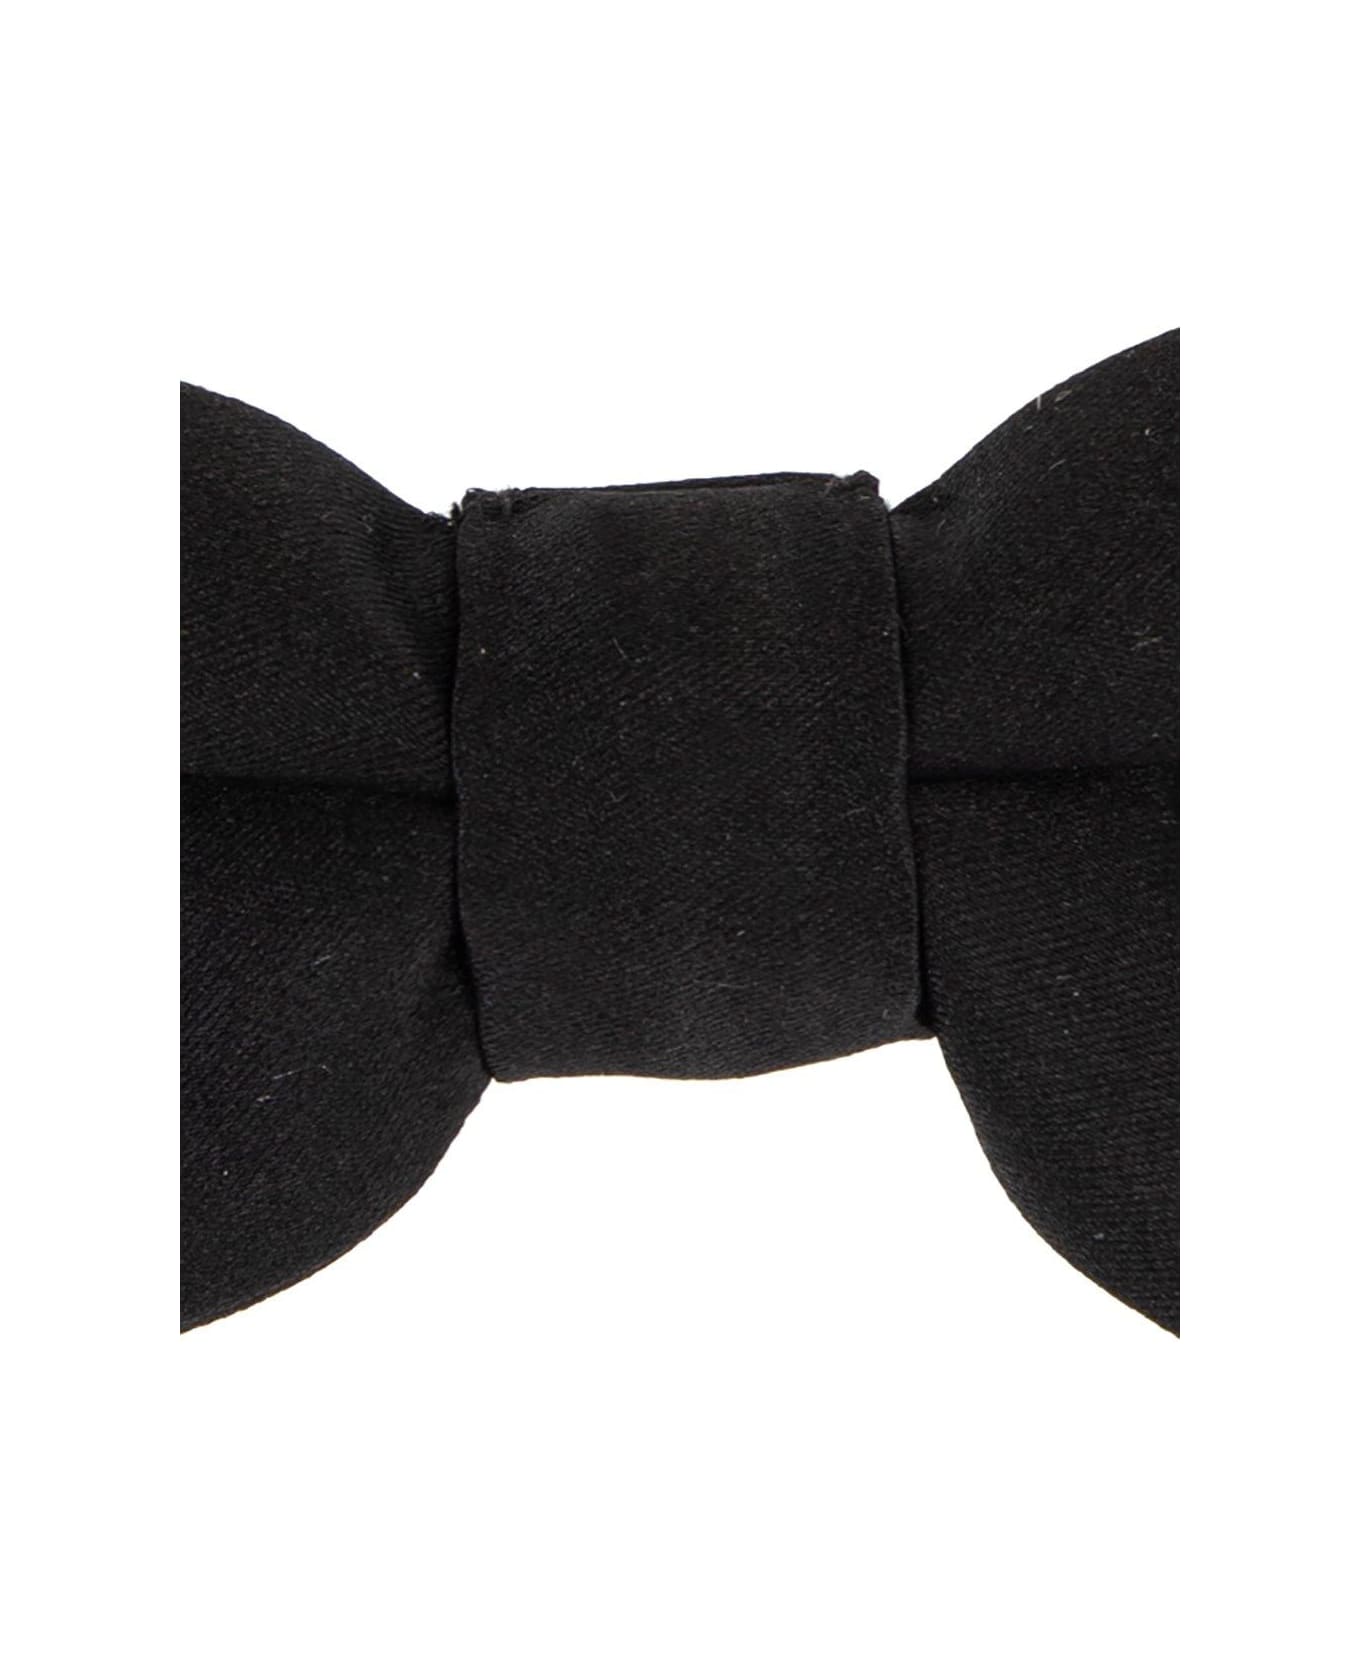 Givenchy Papillon Hook-clipped Bow Tie - NERO